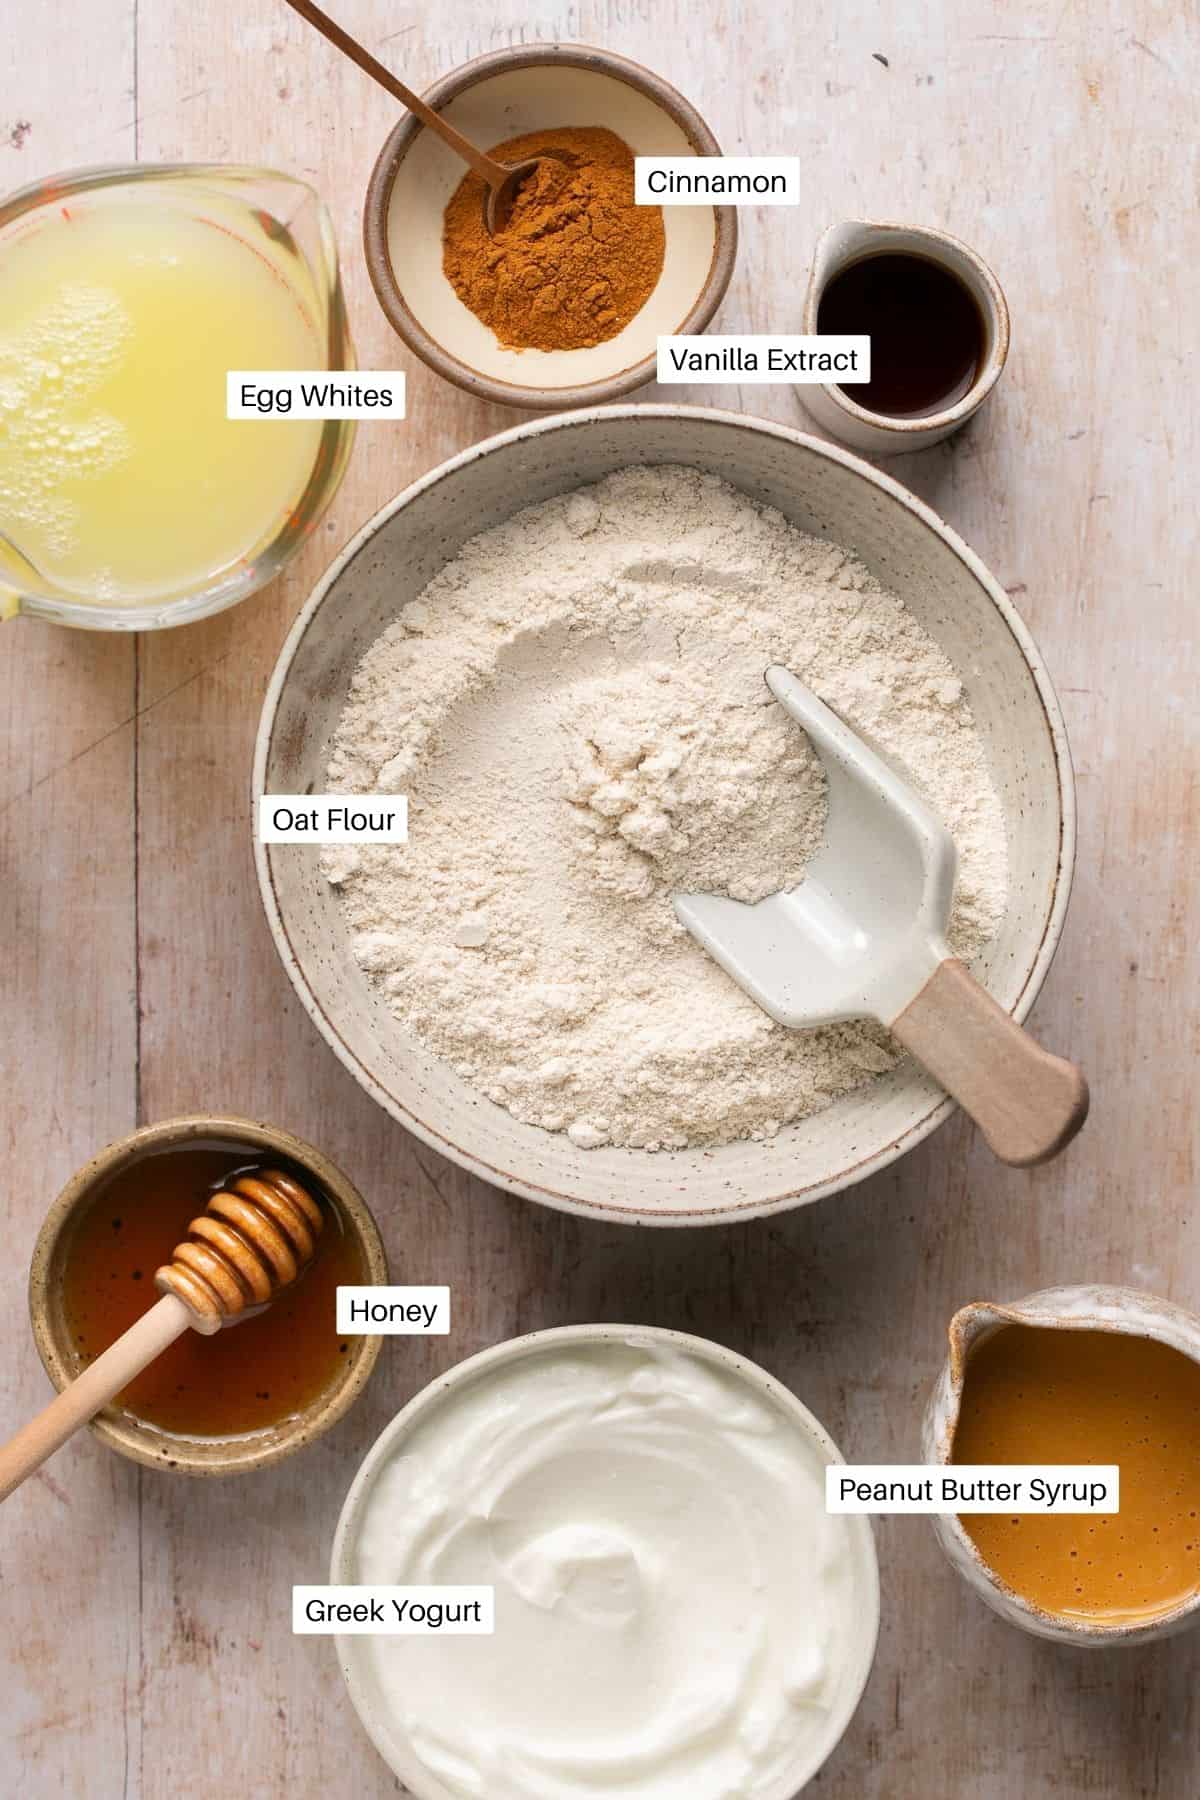 Oat flour, cinnamon, egg whites, vanilla extract, honey, greek yogurt and peanut butter sauce for the pancakes.